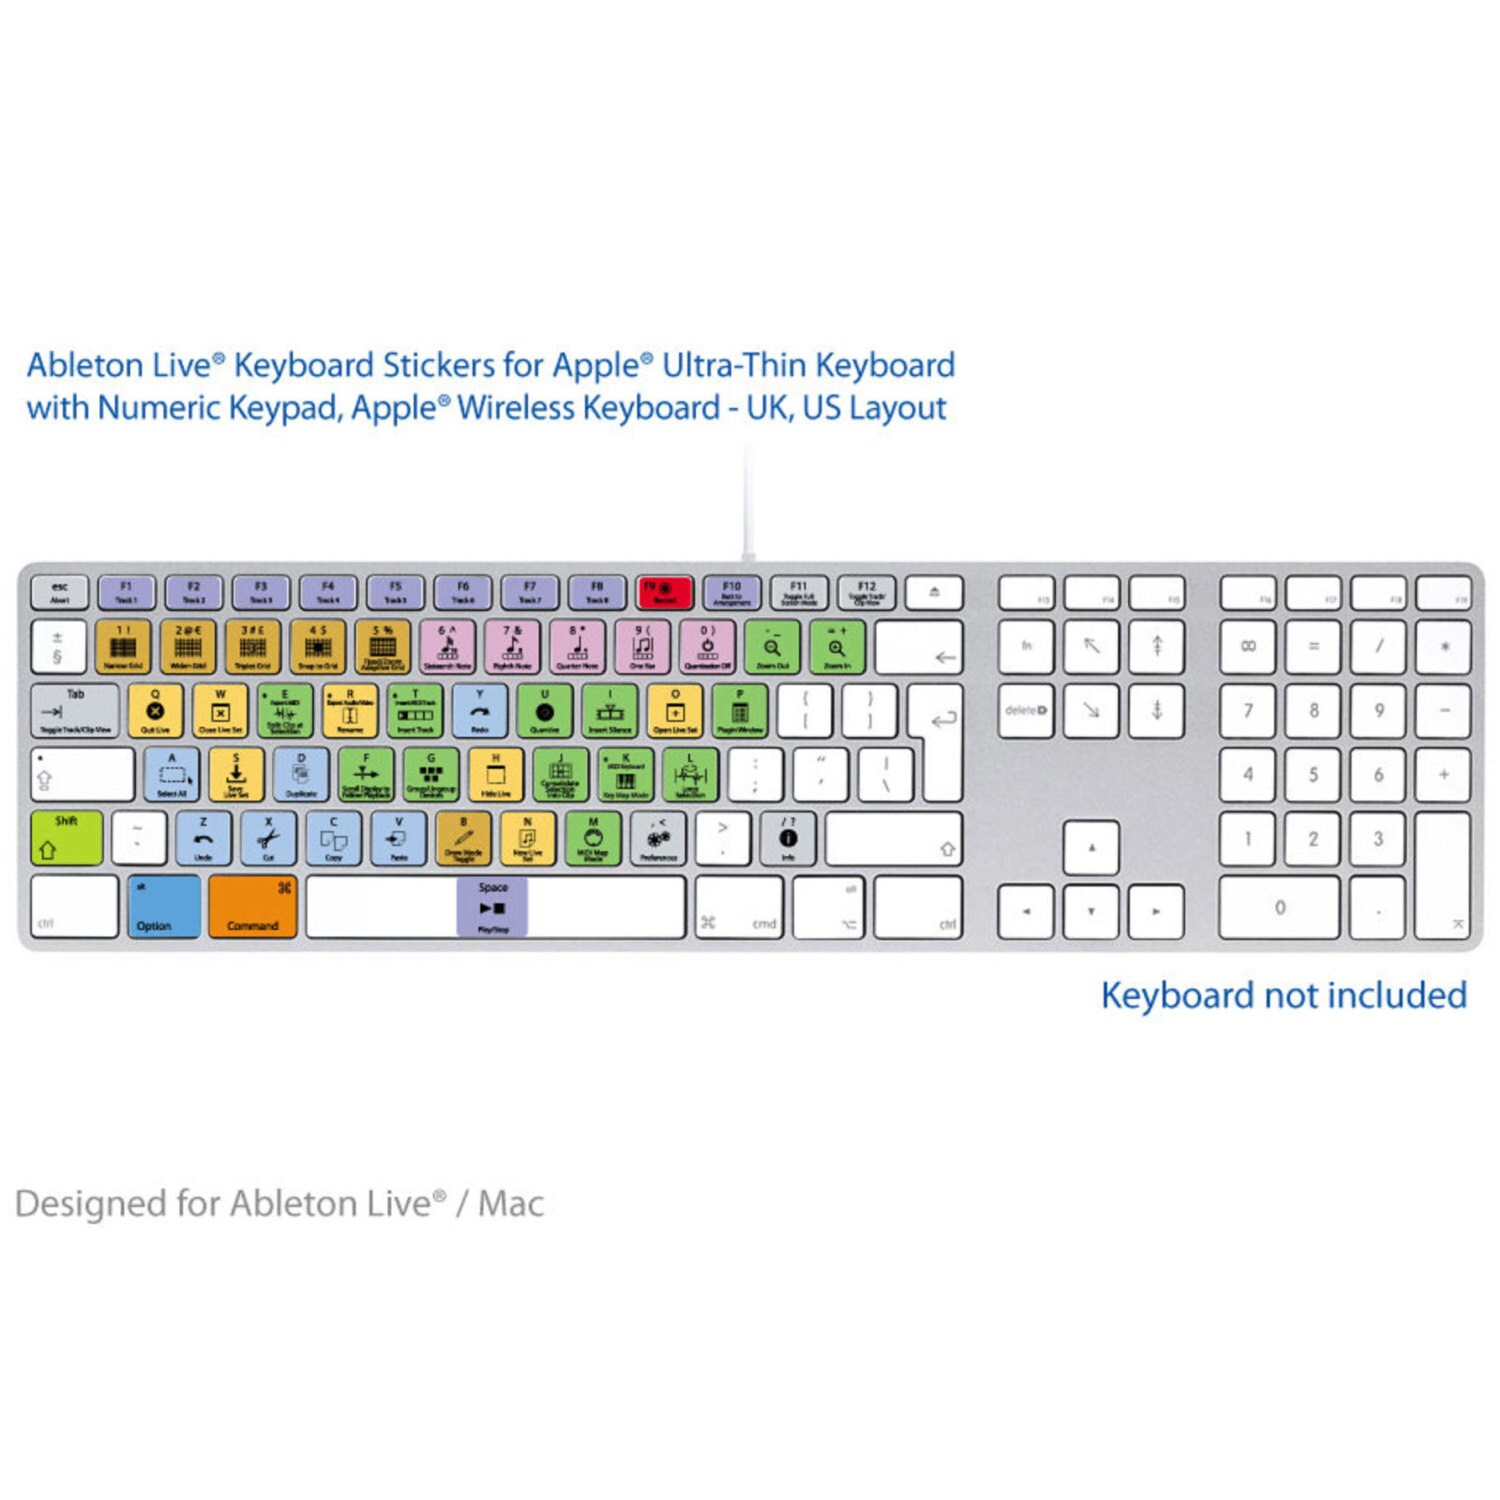 ableton live keyboard shortcuts windows pdf